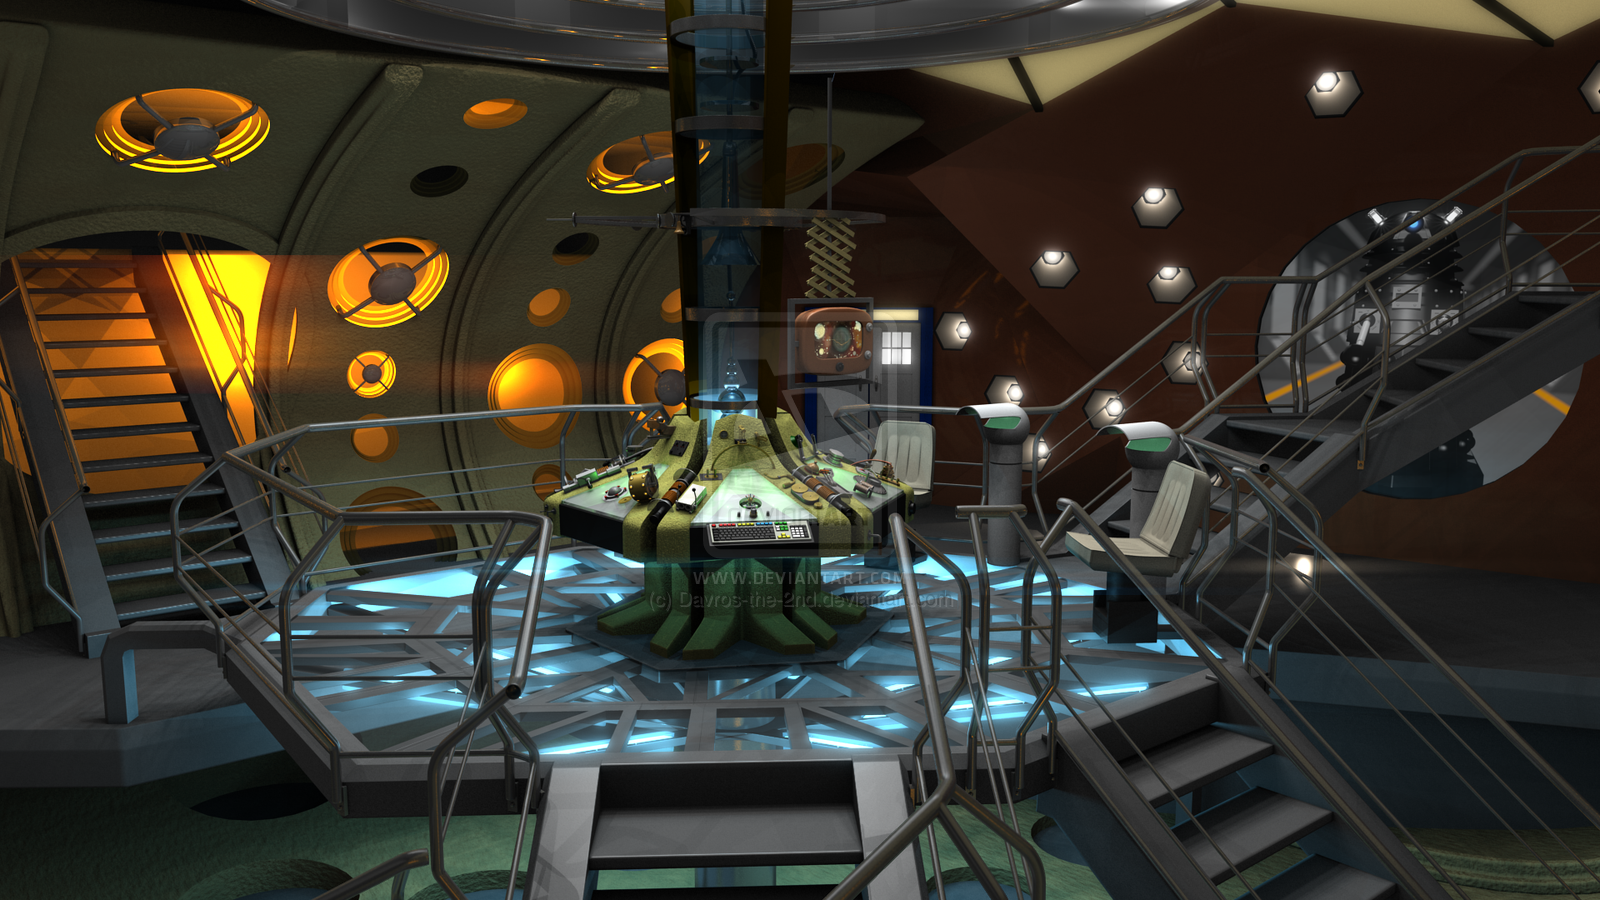 11th doctor's tardisth Doctor (Matt Smith) TARDIS interior